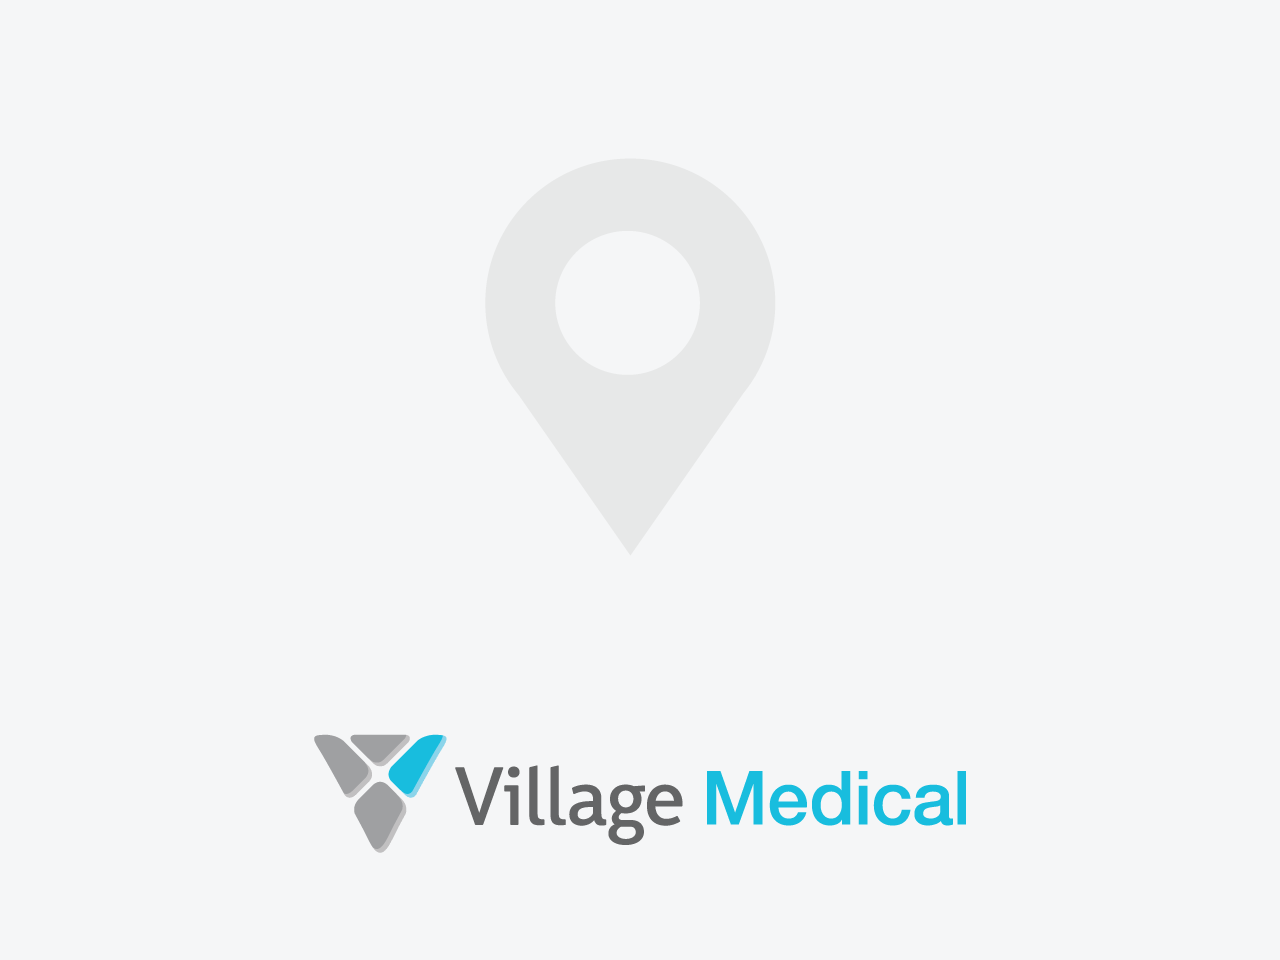 village medical default location photo 1280 960 gray